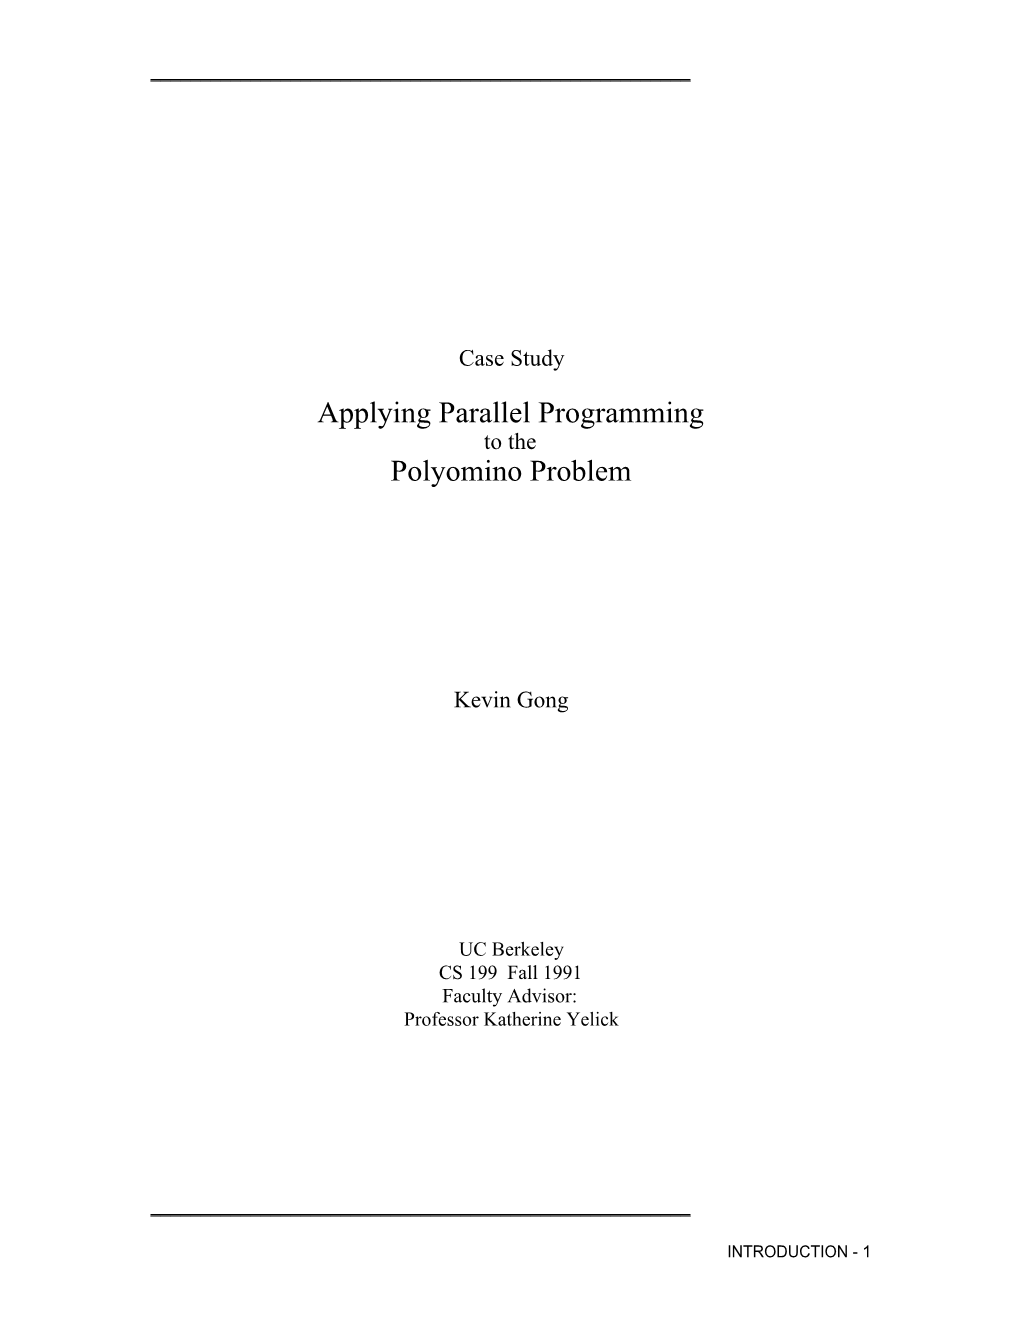 Applying Parallel Programming Polyomino Problem